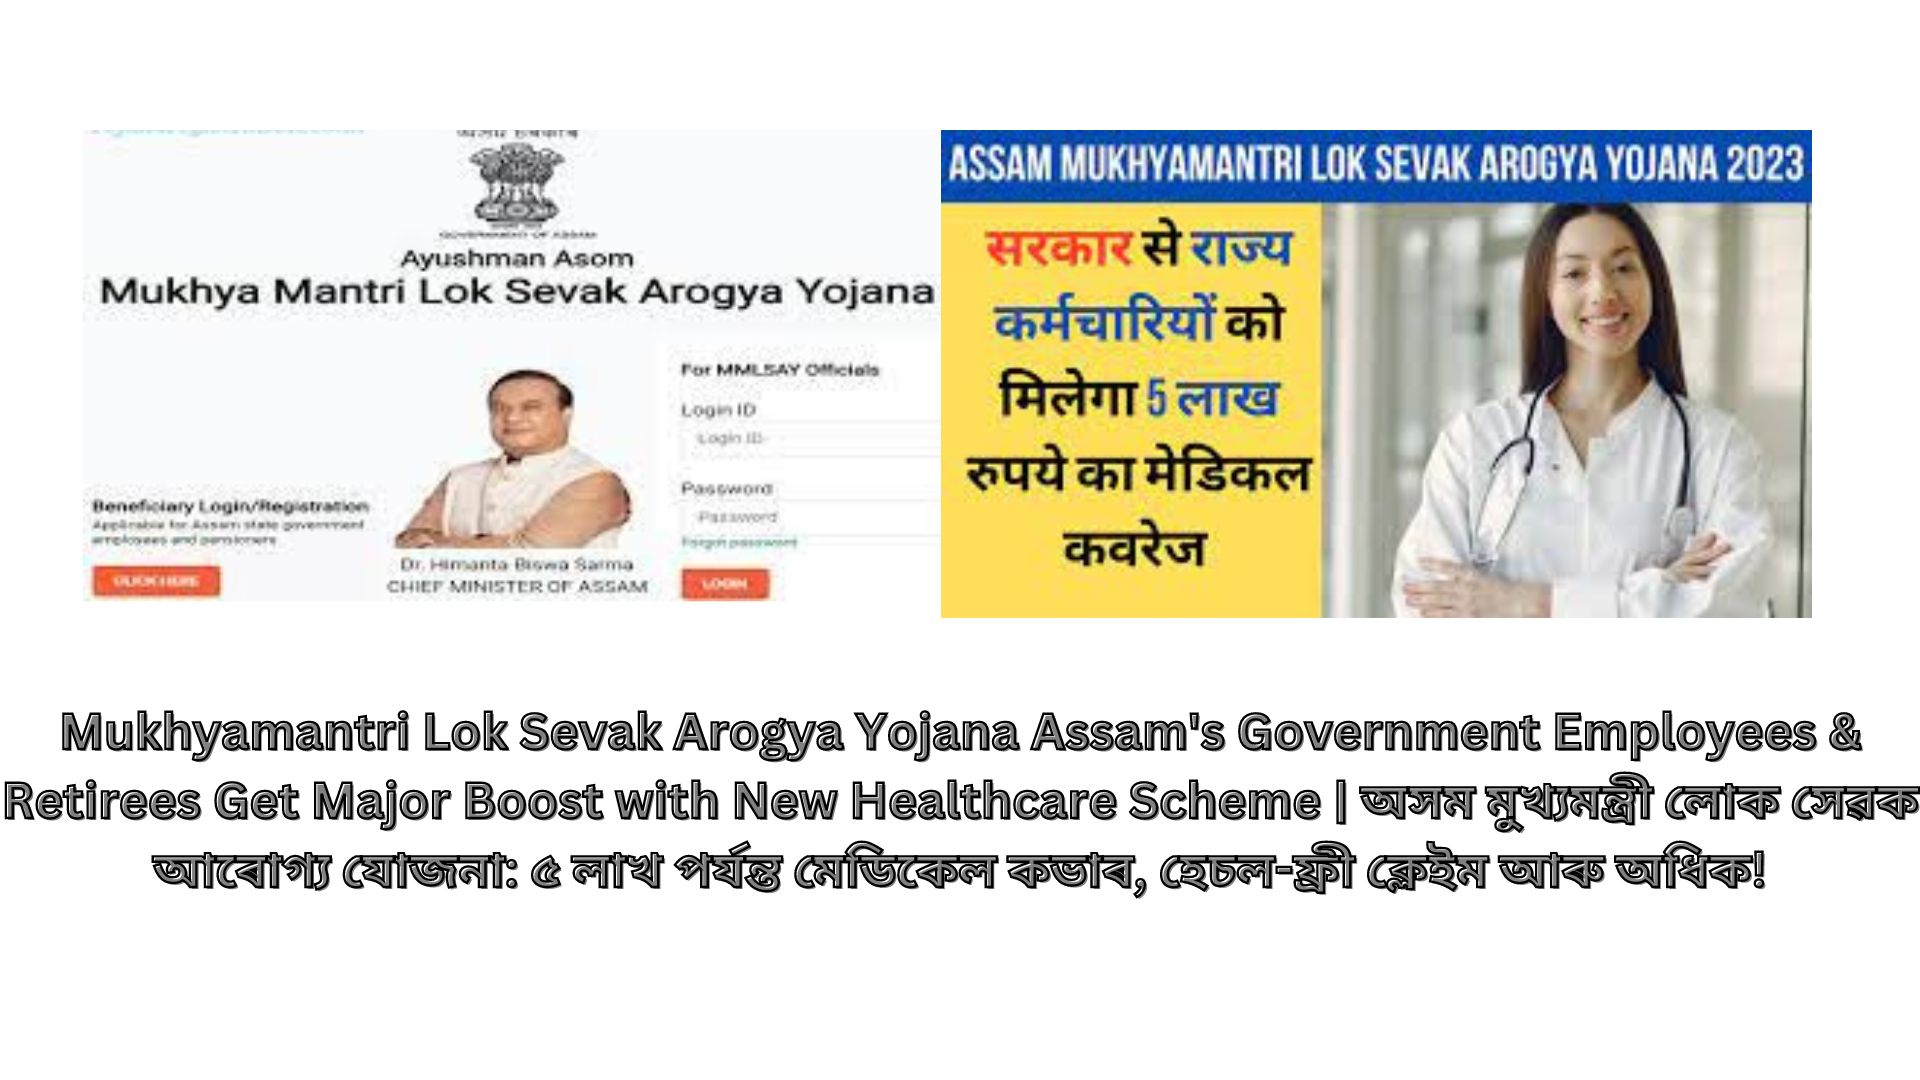 Mukhyamantri Lok Sevak Arogya Yojana Assam's Government Employees & Retirees Get Major Boost with New Healthcare Scheme | অসম মুখ্যমন্ত্ৰী লোক সেৱক আৰোগ্য যোজনা: ৫ লাখ পৰ্যন্ত মেডিকেল কভাৰ, হেচল-ফ্ৰী ক্লেইম আৰু অধিক!